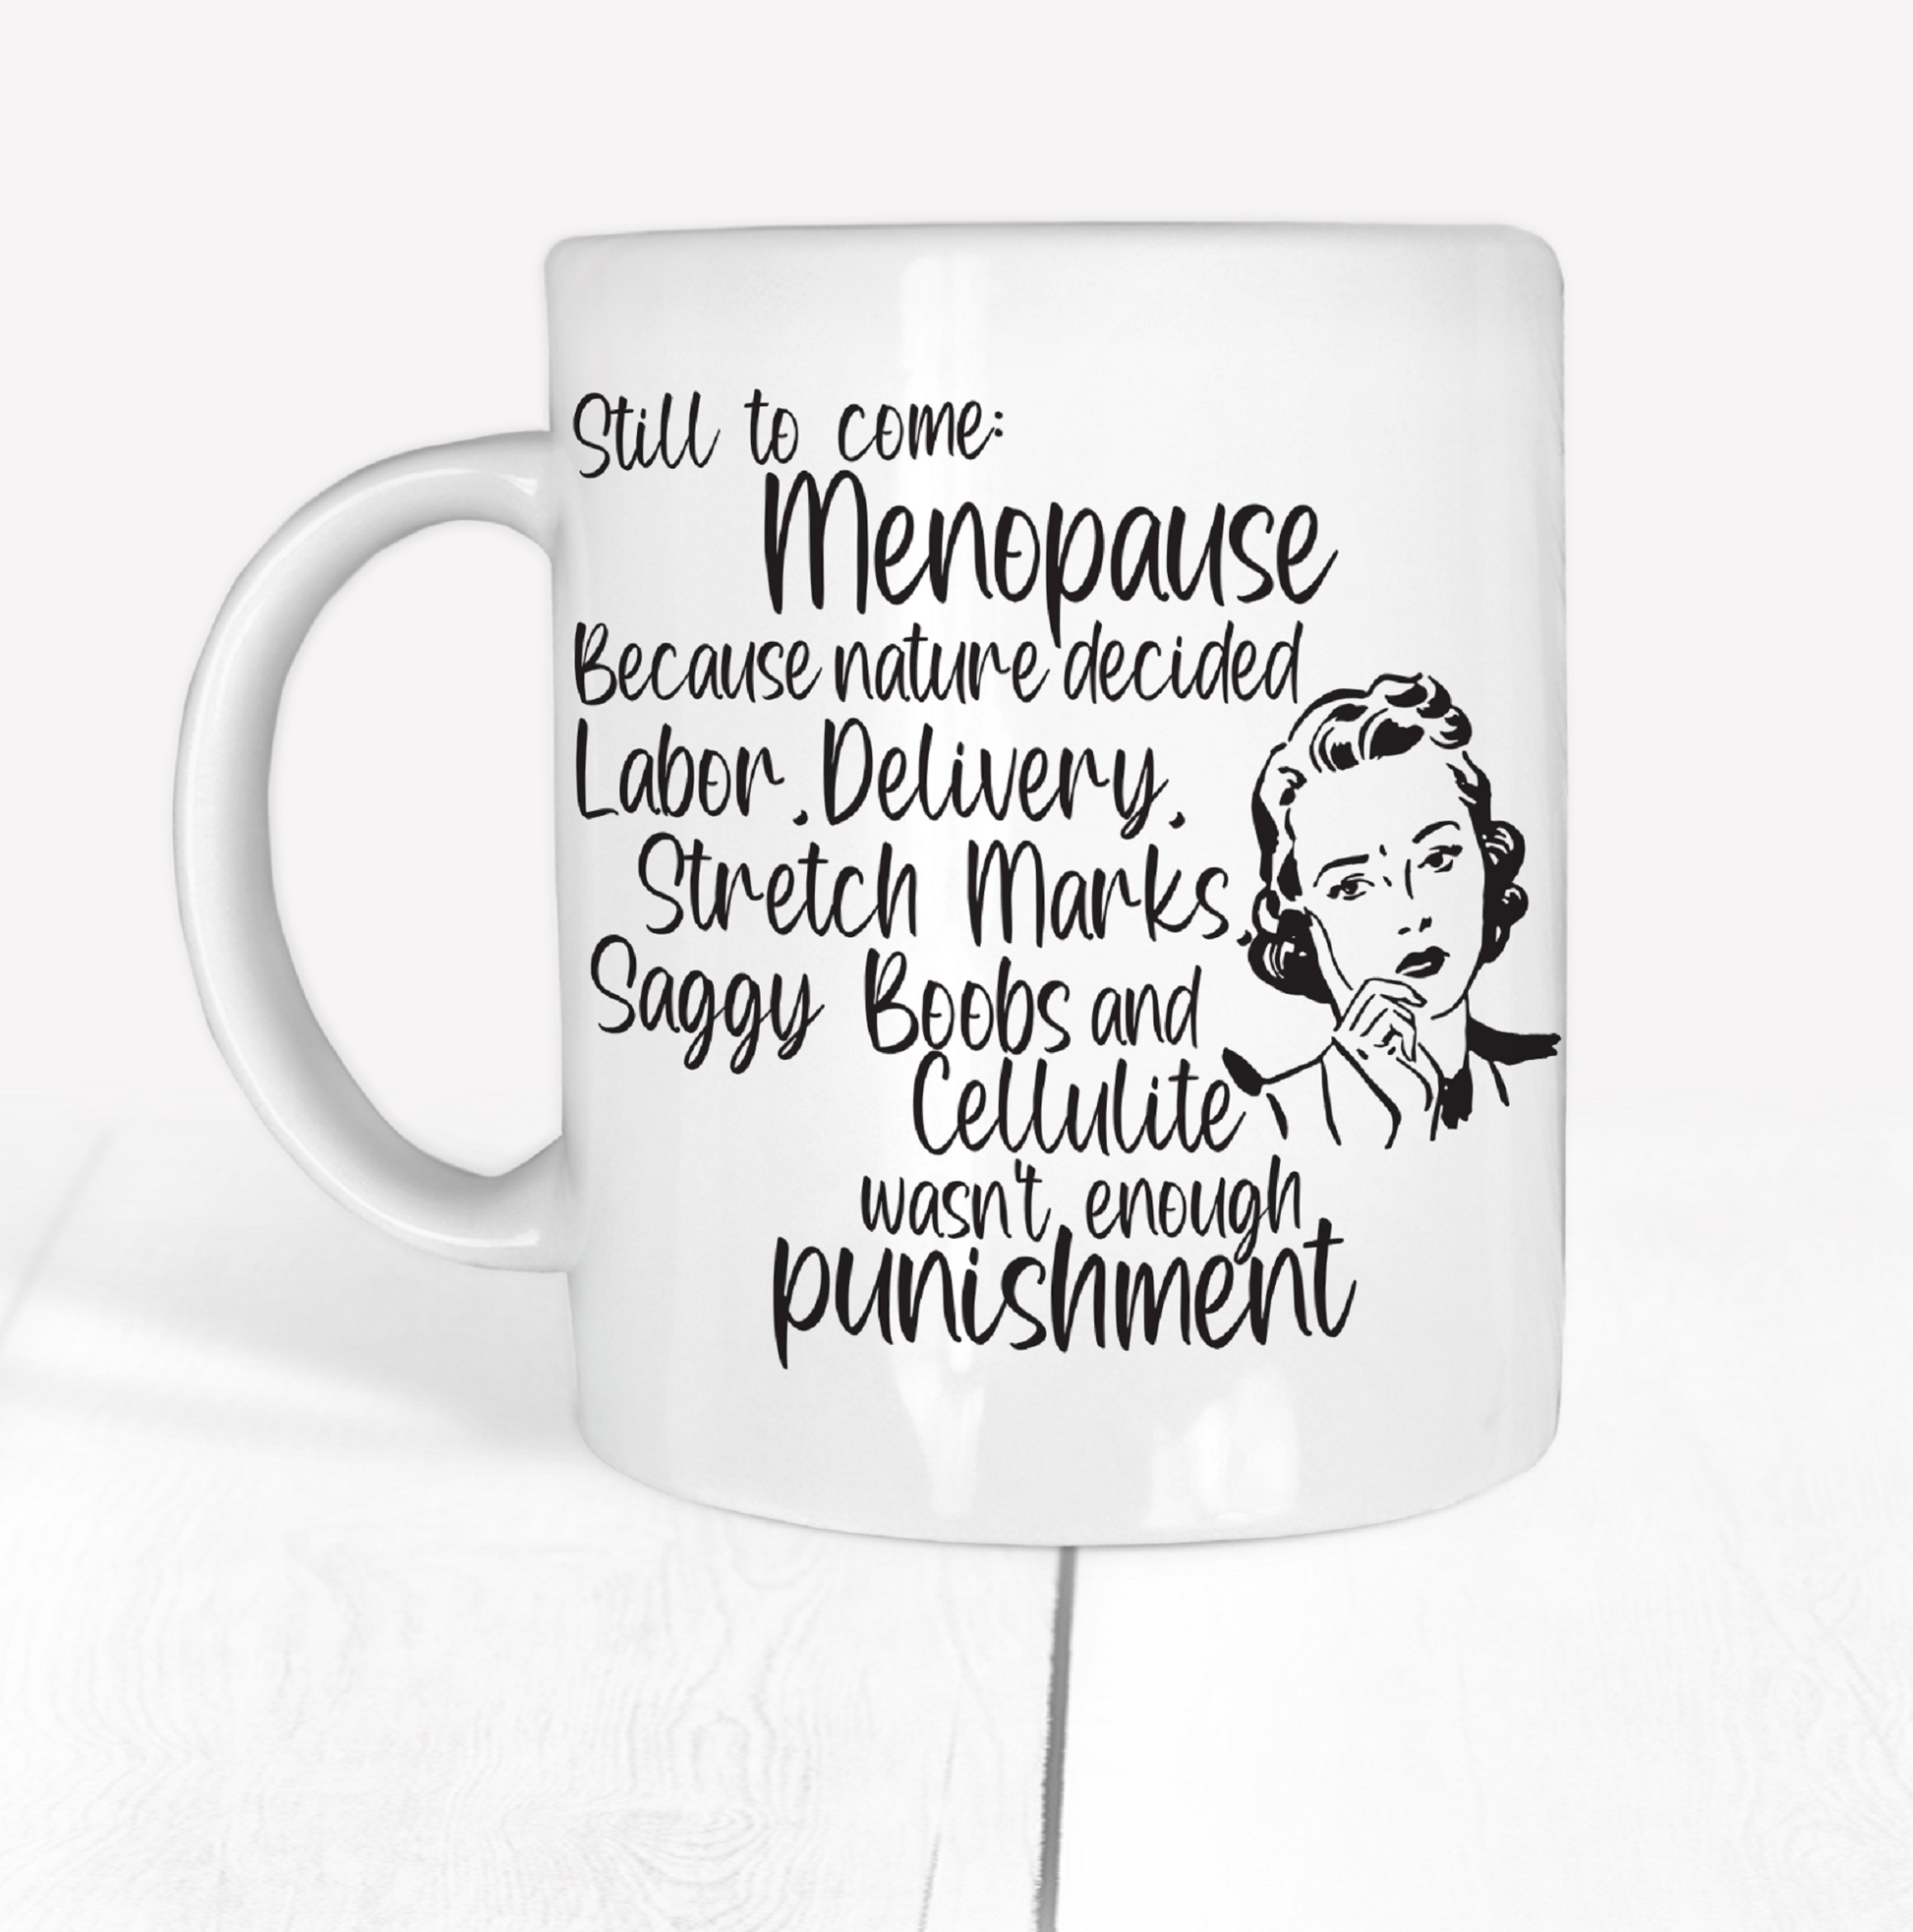  Funny Menopause Coffee Mug by Free Spirit Accessories sold by Free Spirit Accessories